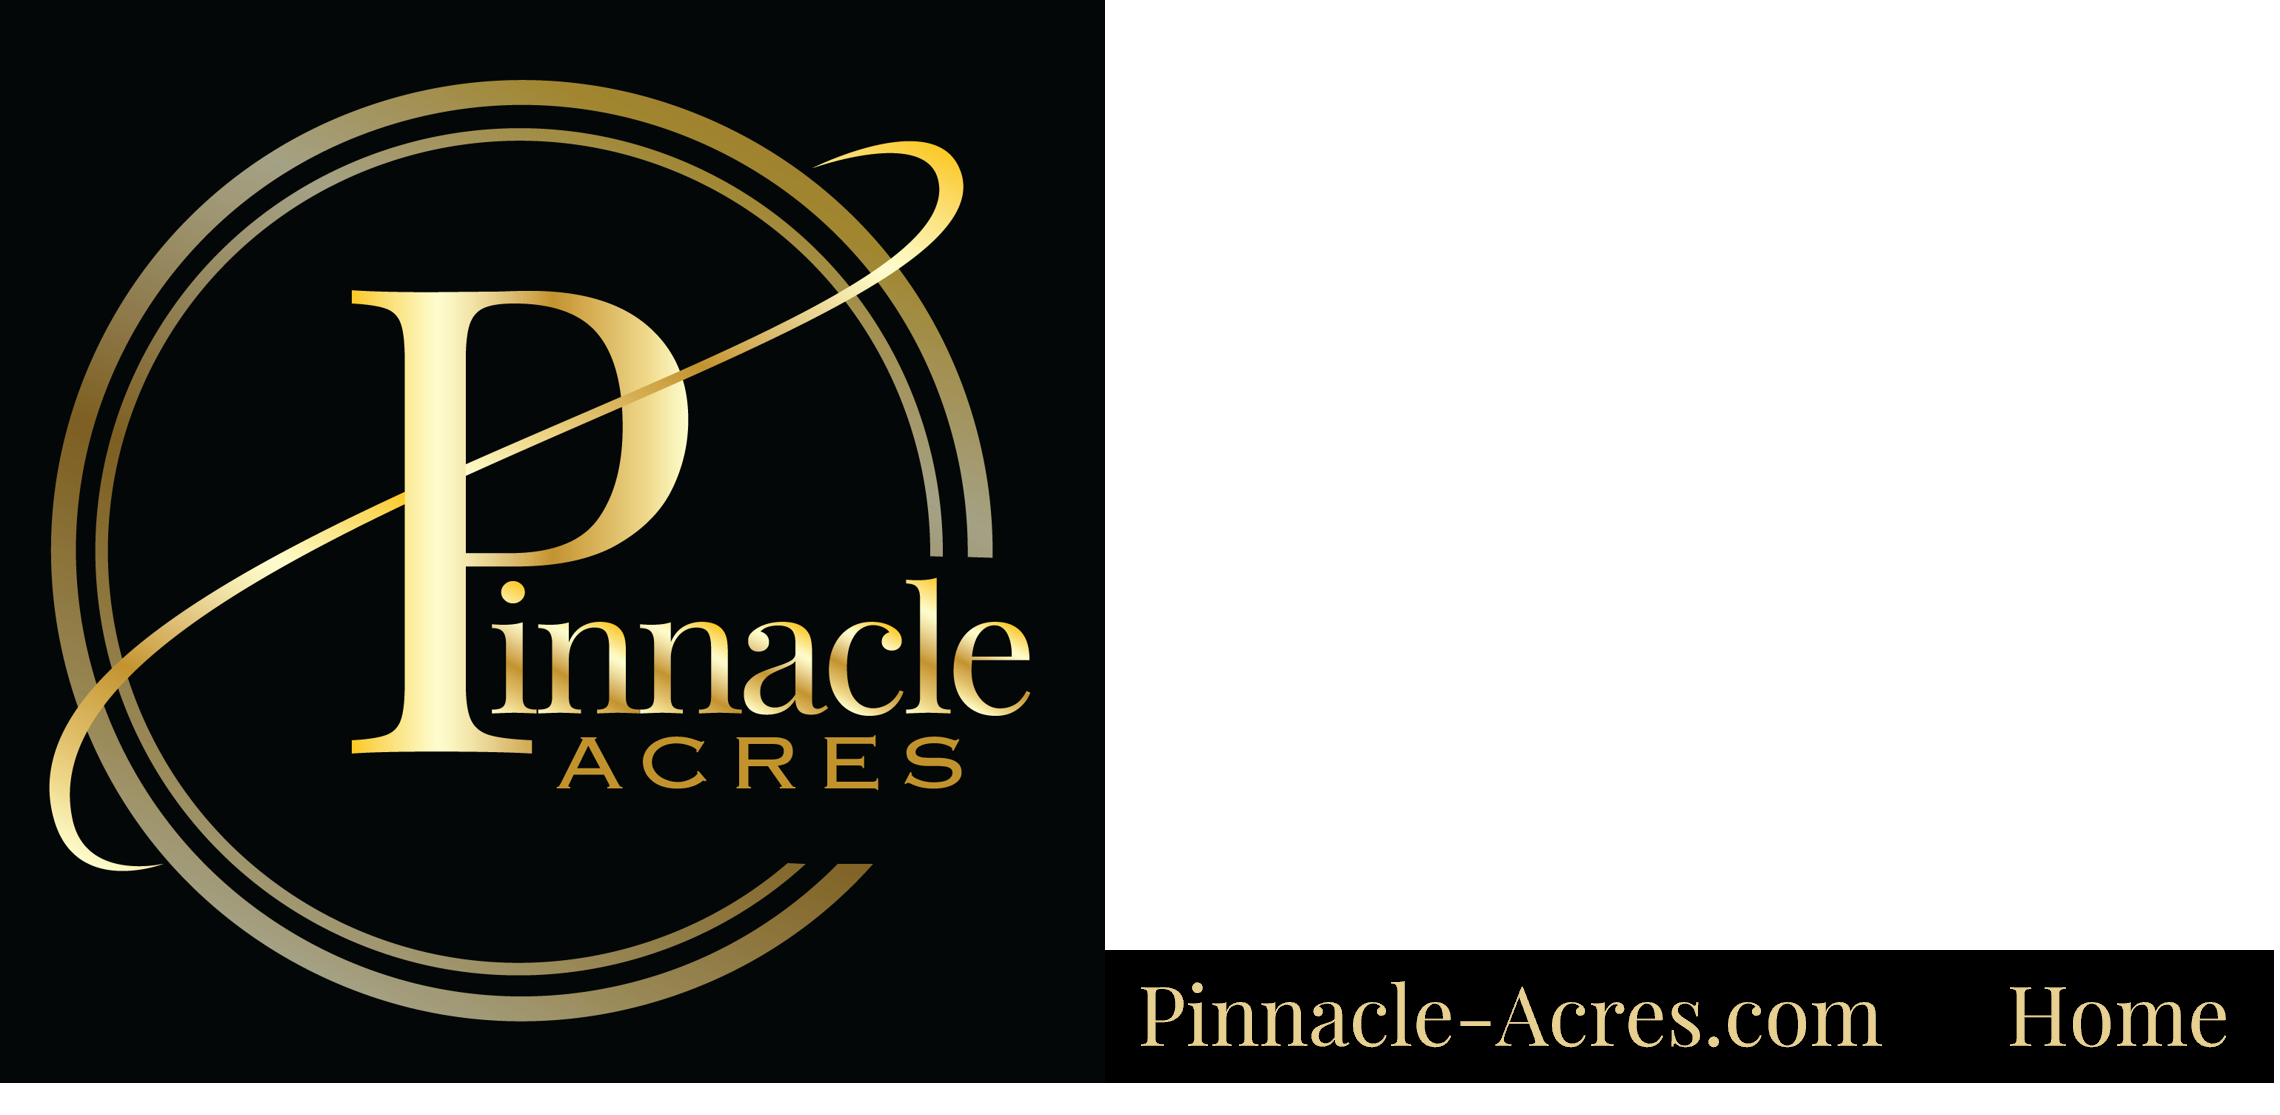 Pinnacle-Acres.com